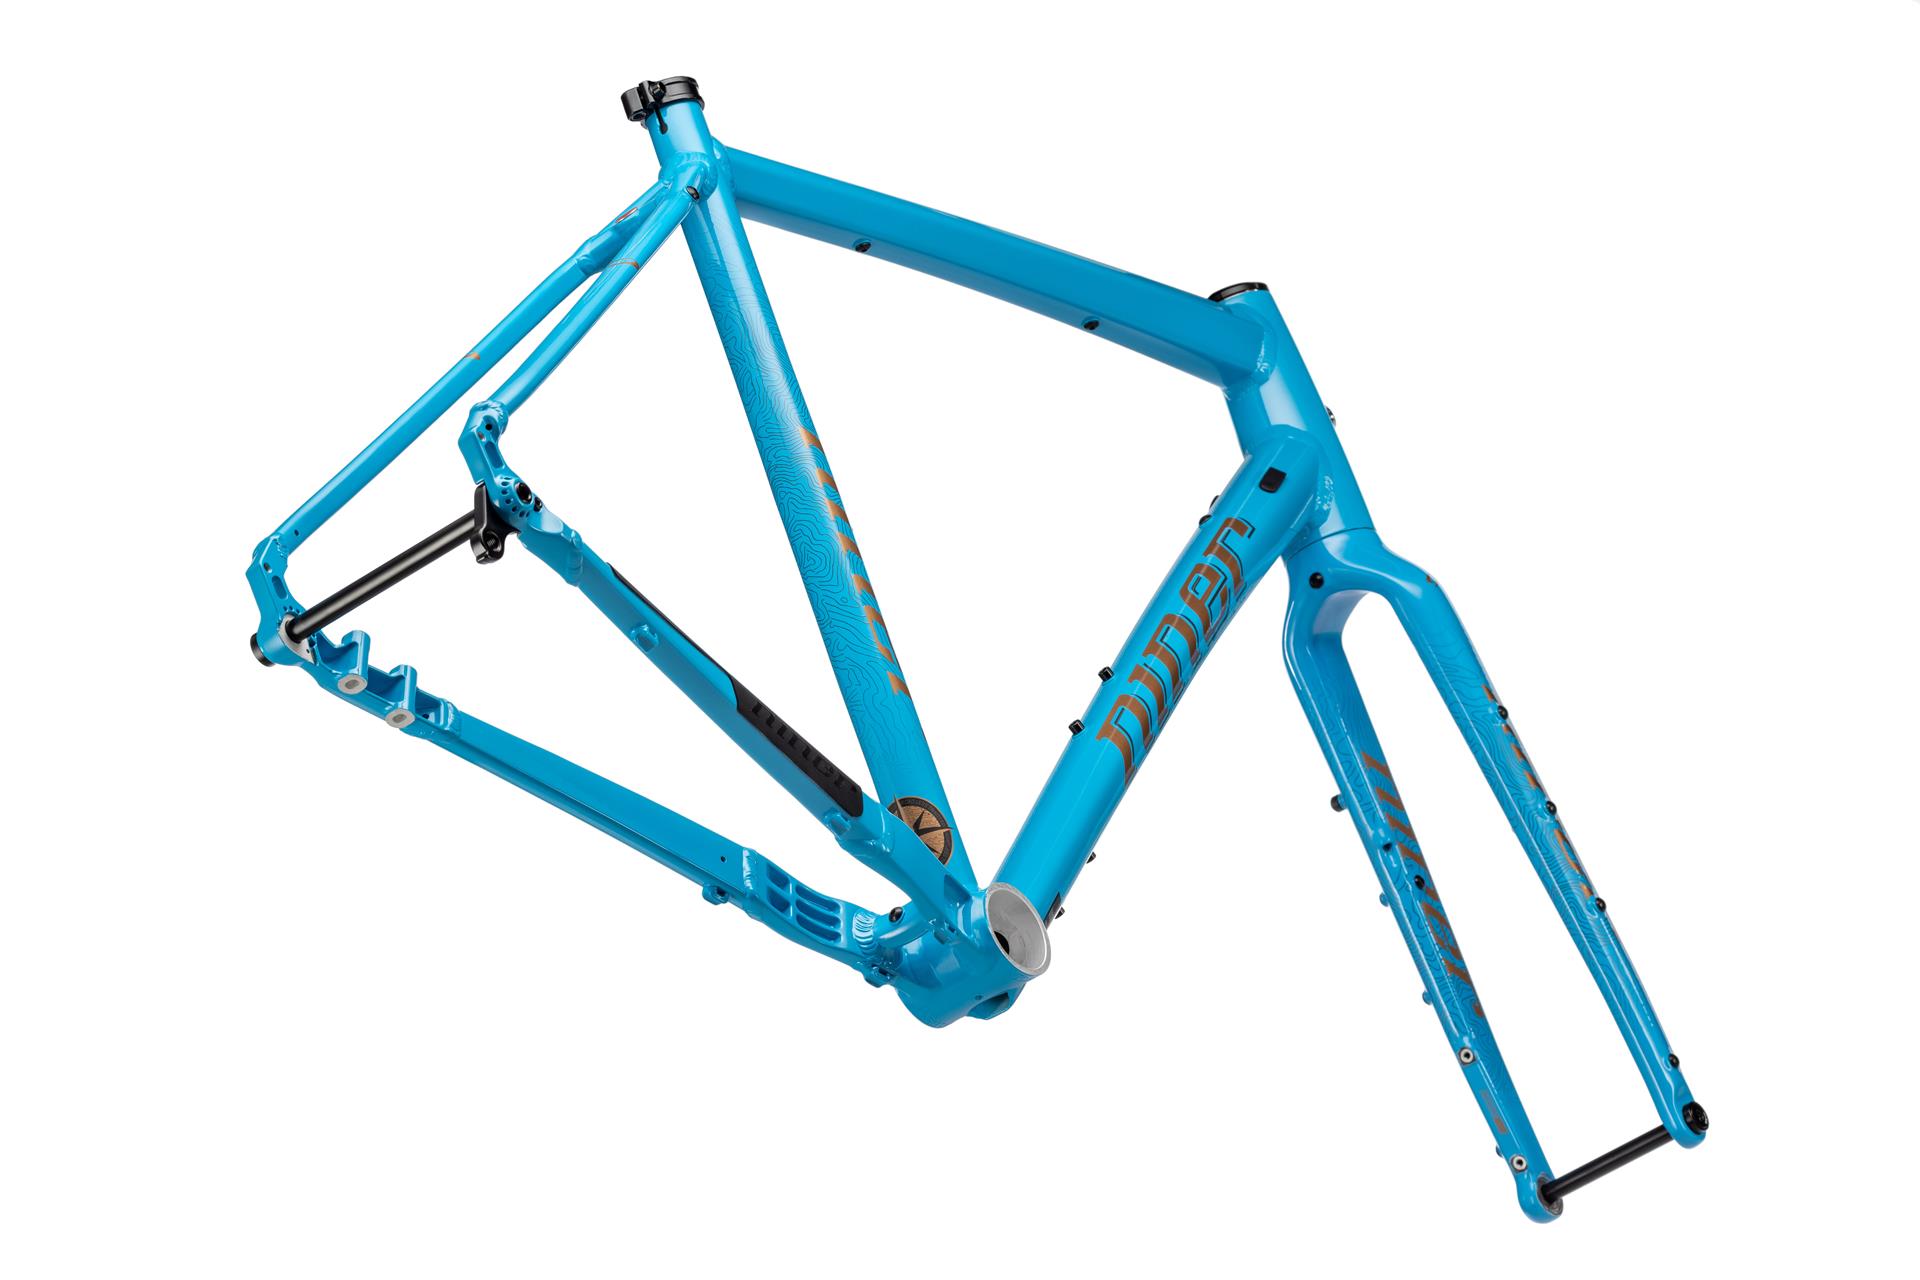 Niner RLT 2-star велосипед, голубой, 53